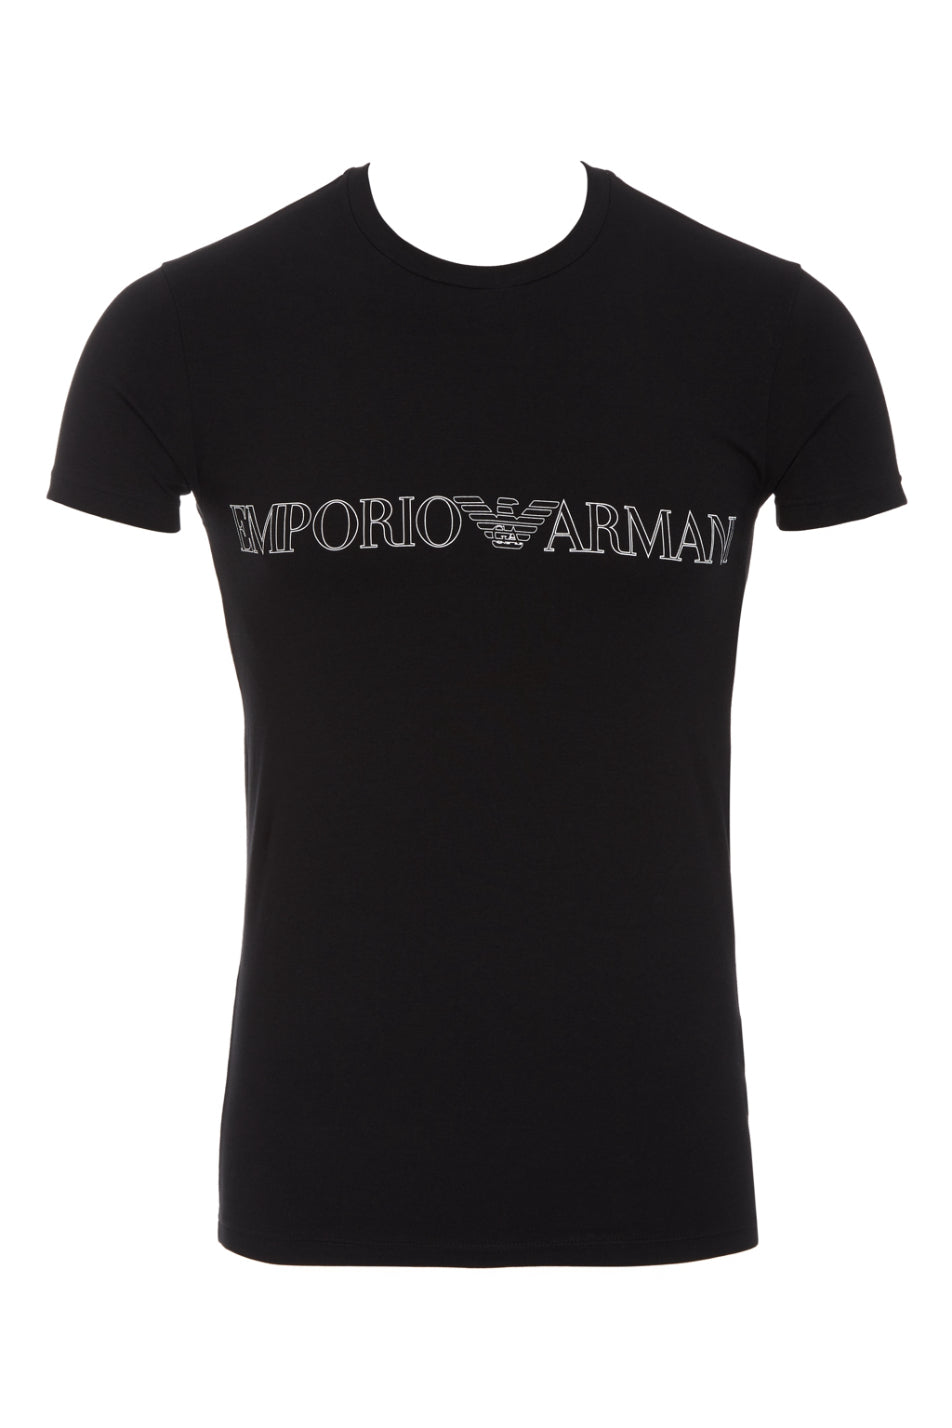 Emporio Armani Men's Crew Neck T-Shirt